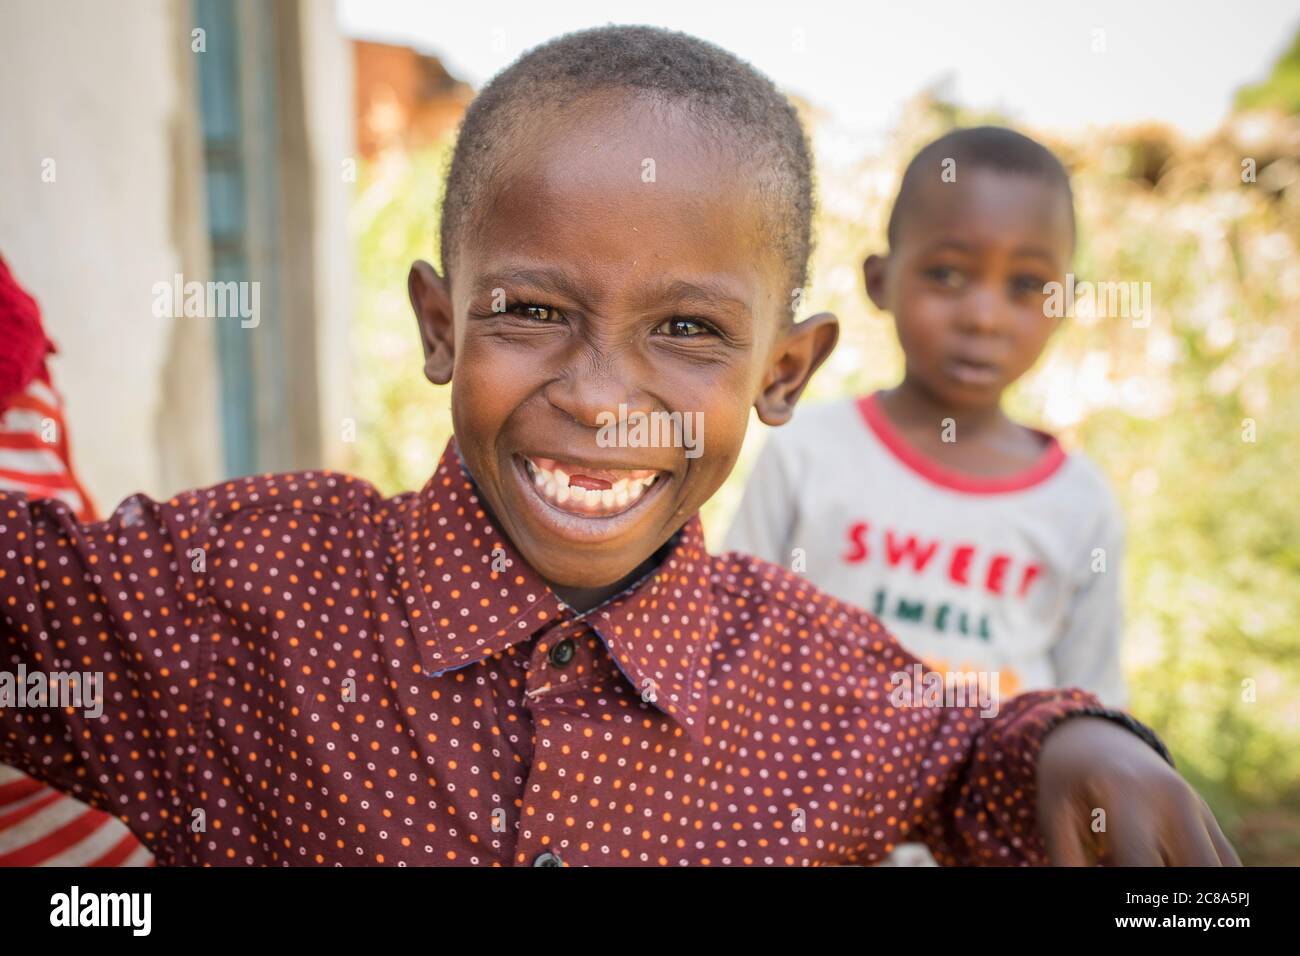 Faces of smiling, happy children in Makueni County, Kenya. Stock Photo